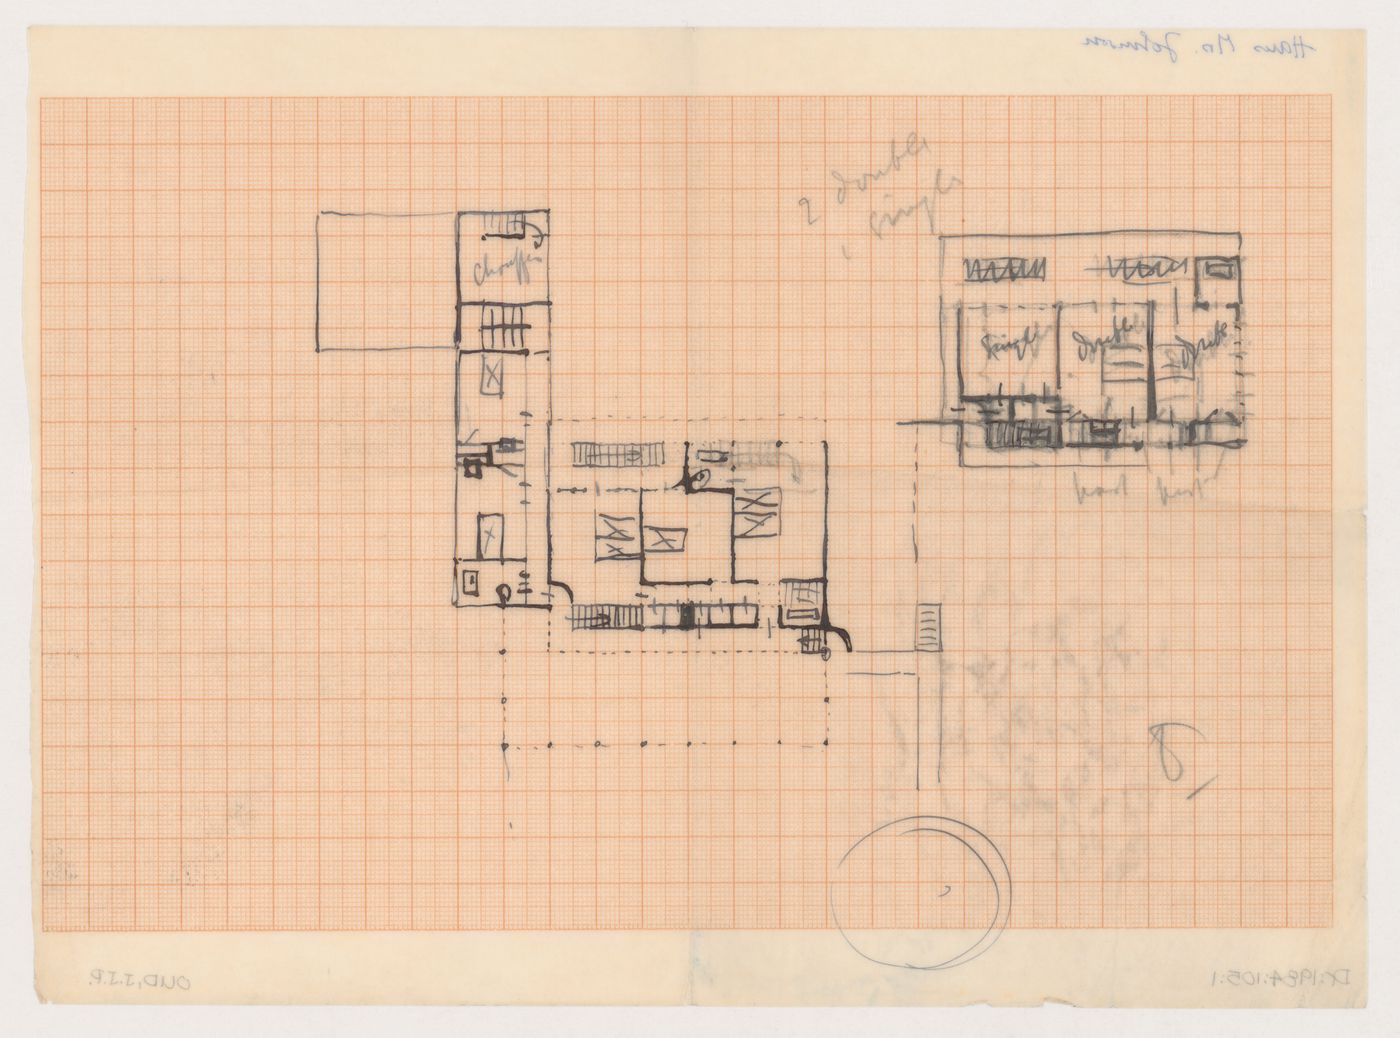 Sketch plans for Johnson House, Pinehurst, North Carolina